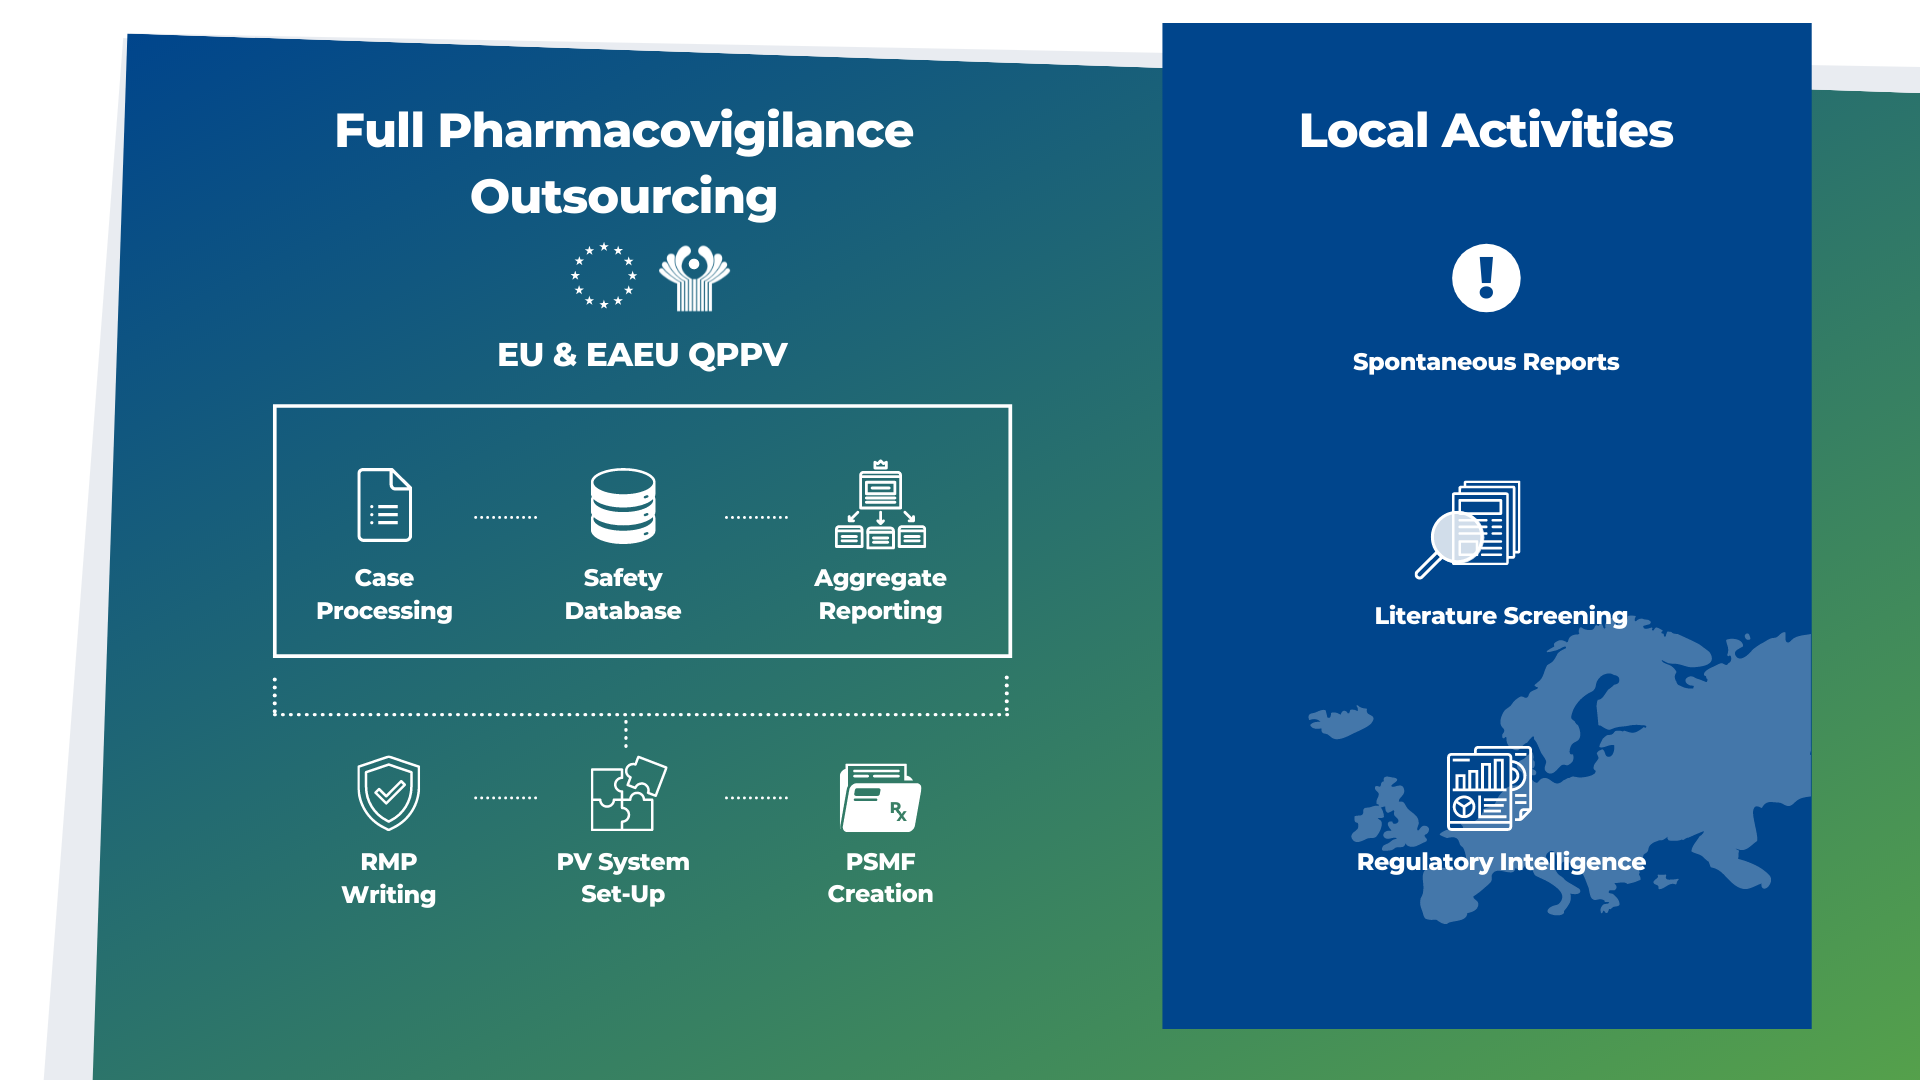 Full Pharmacovigilance Outsourcing